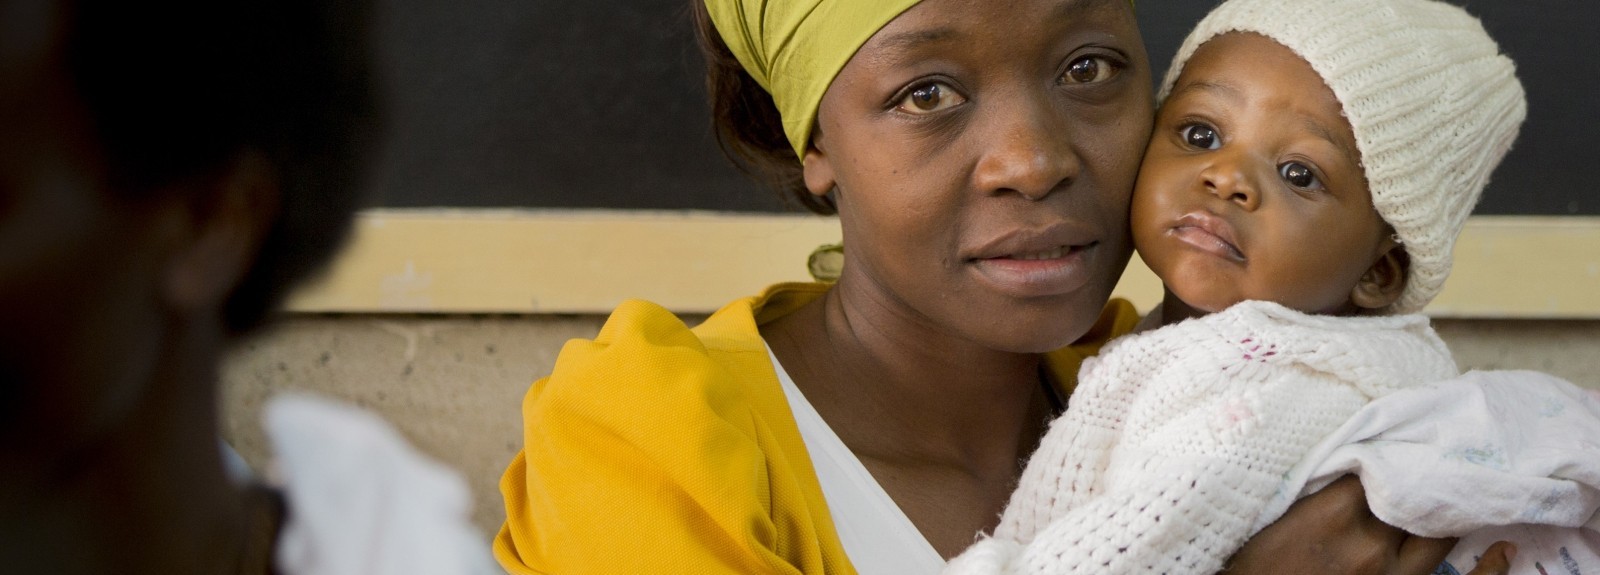 IMA World Health will lead a $200 million USAID award to improve maternal, newborn and child health in fragile settings.